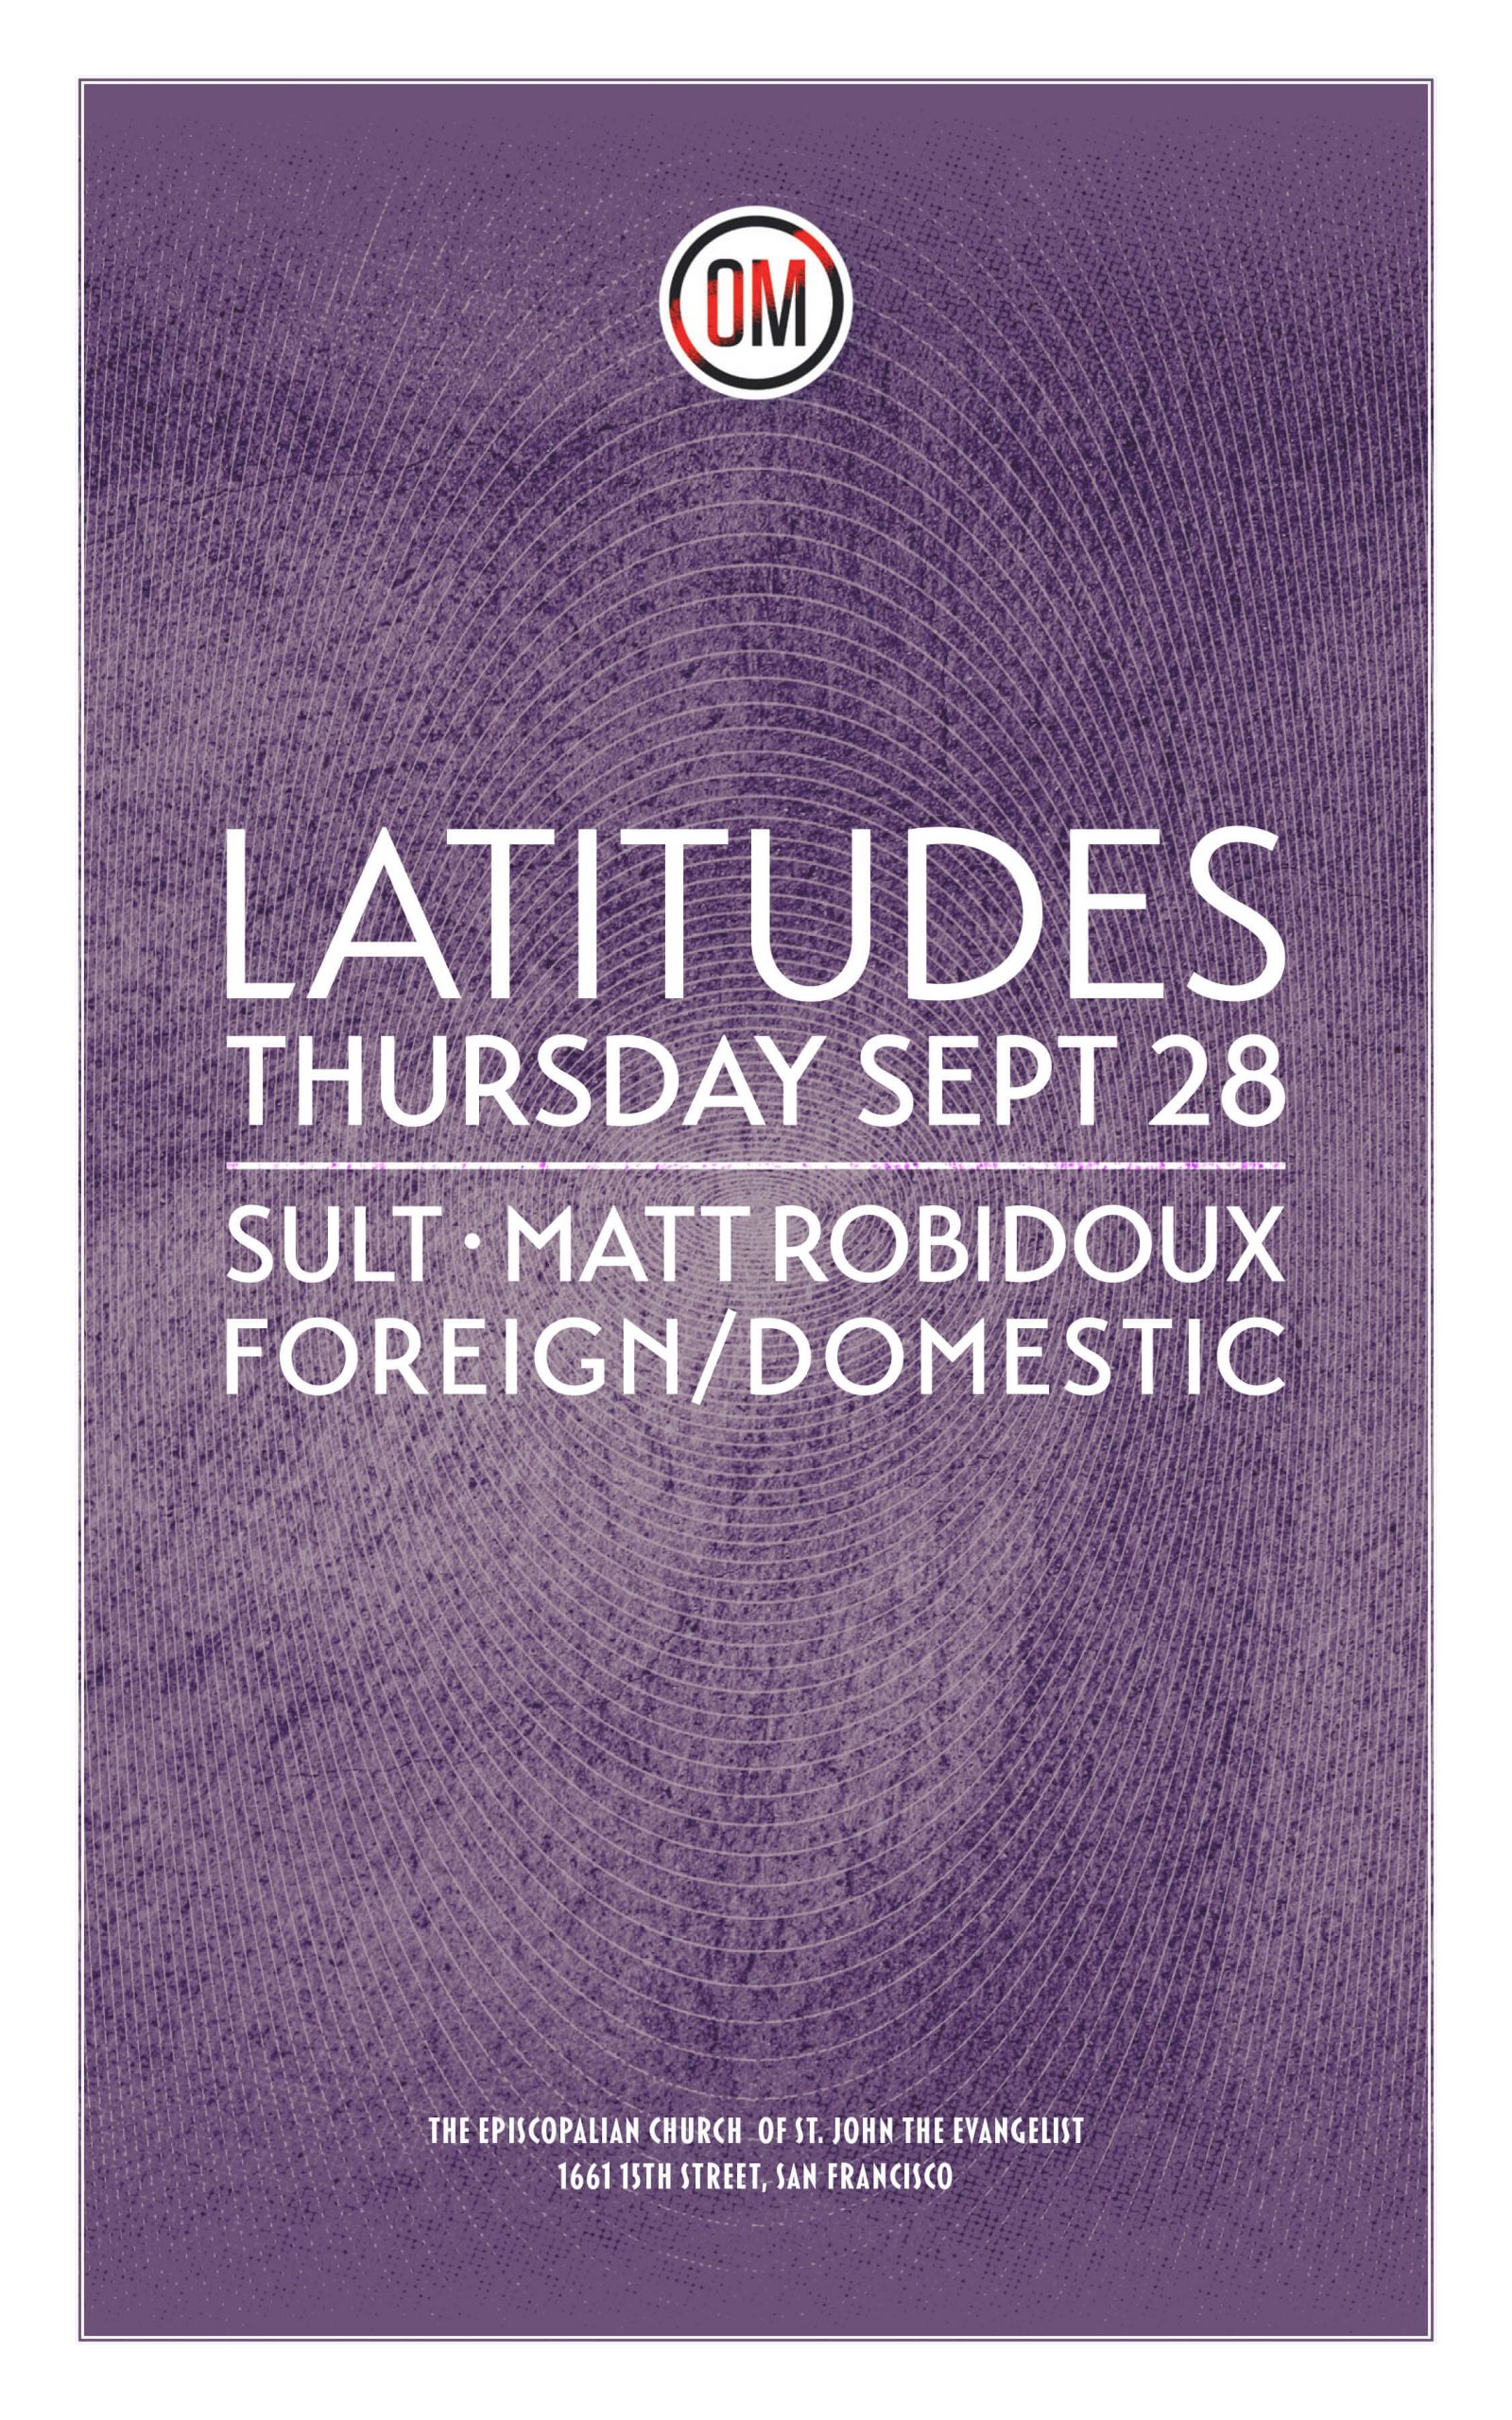 Latitudes Thursday Sept 28